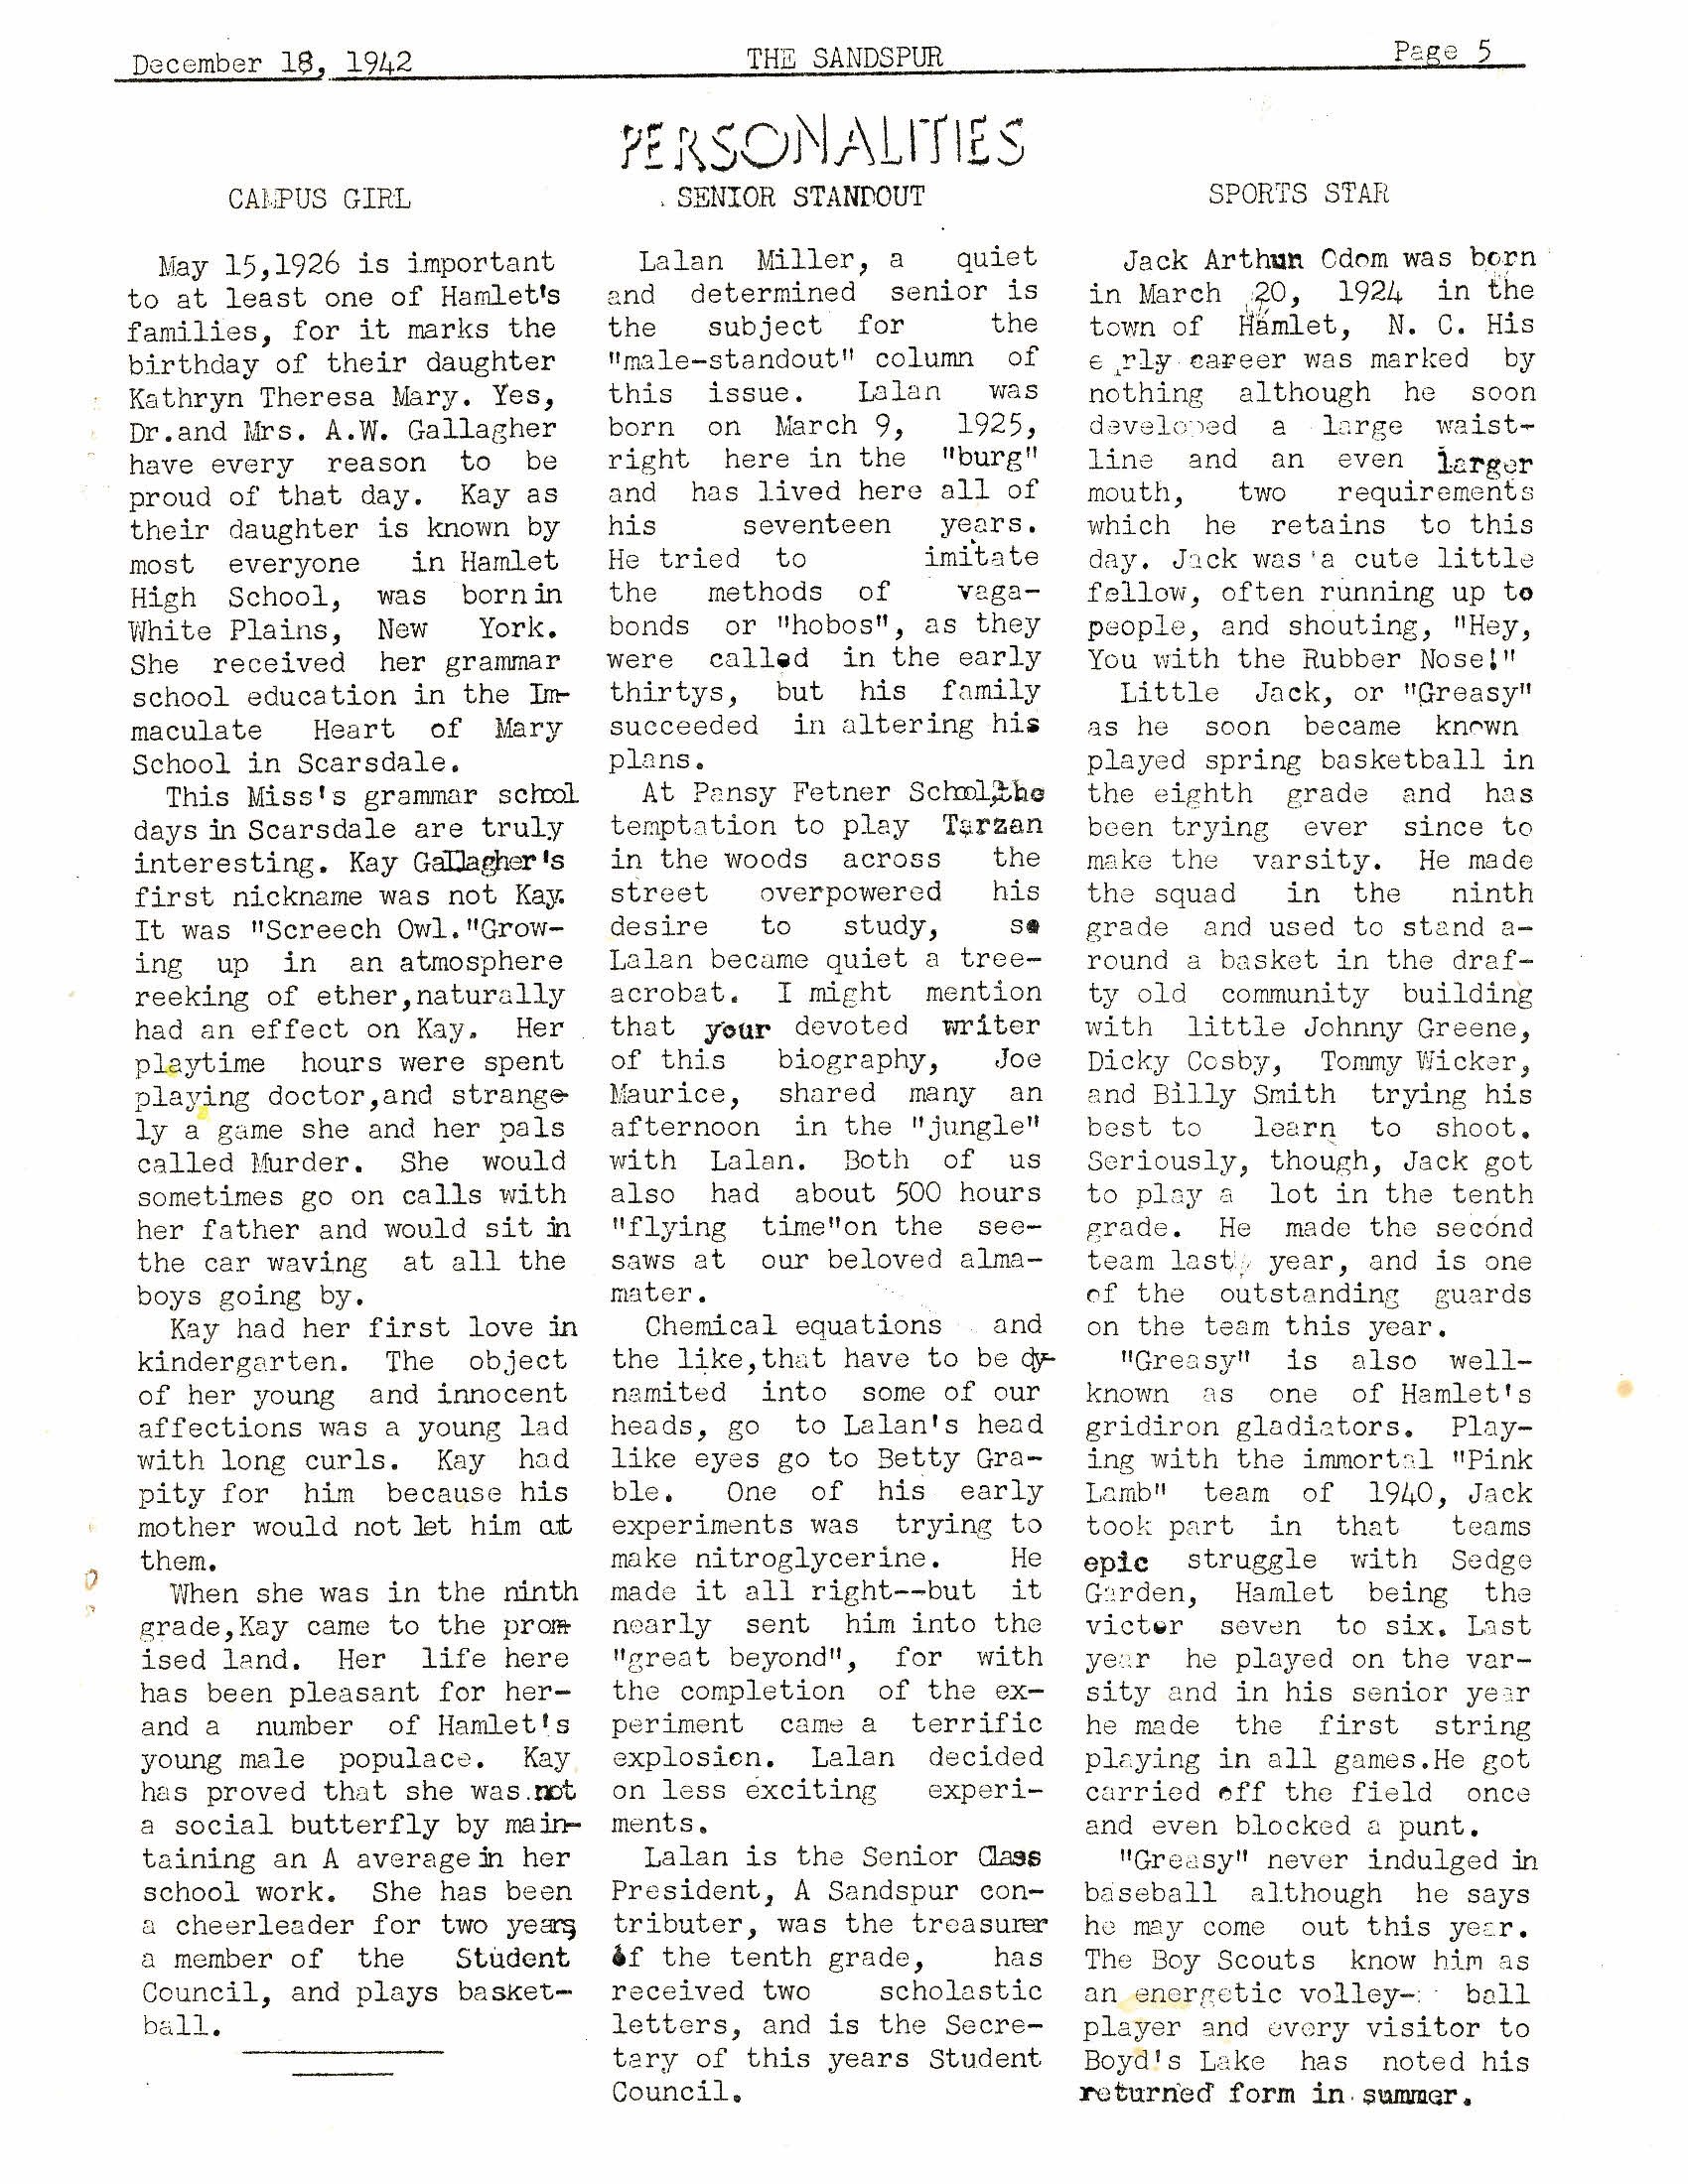 Sandspur December 18, 1942 (7).jpg